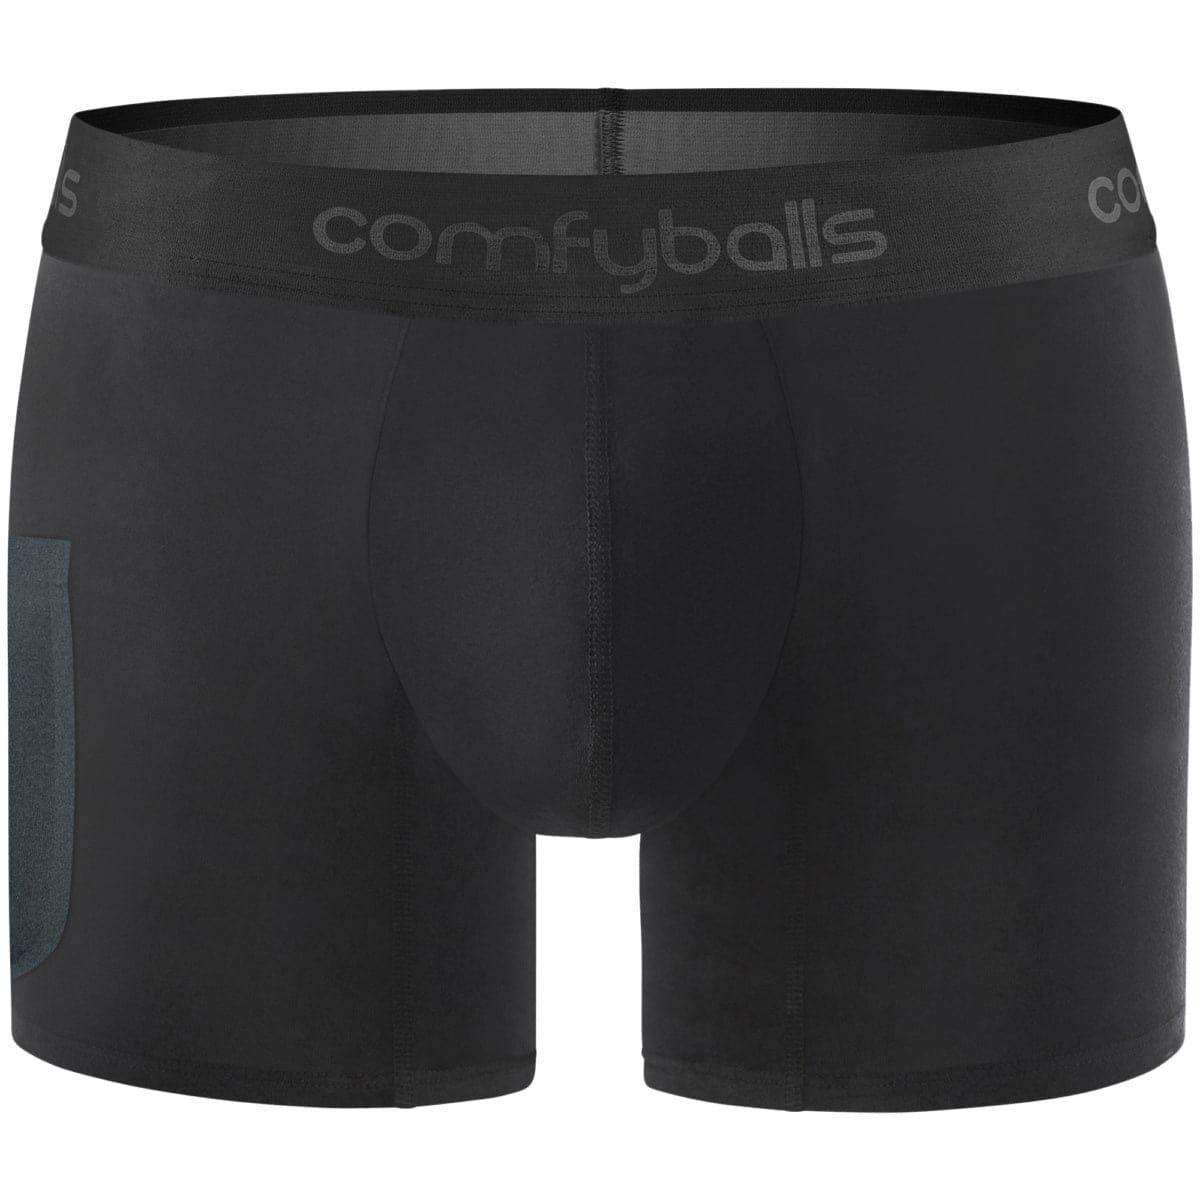 Comfyballs Pitch Black Performance Pocket